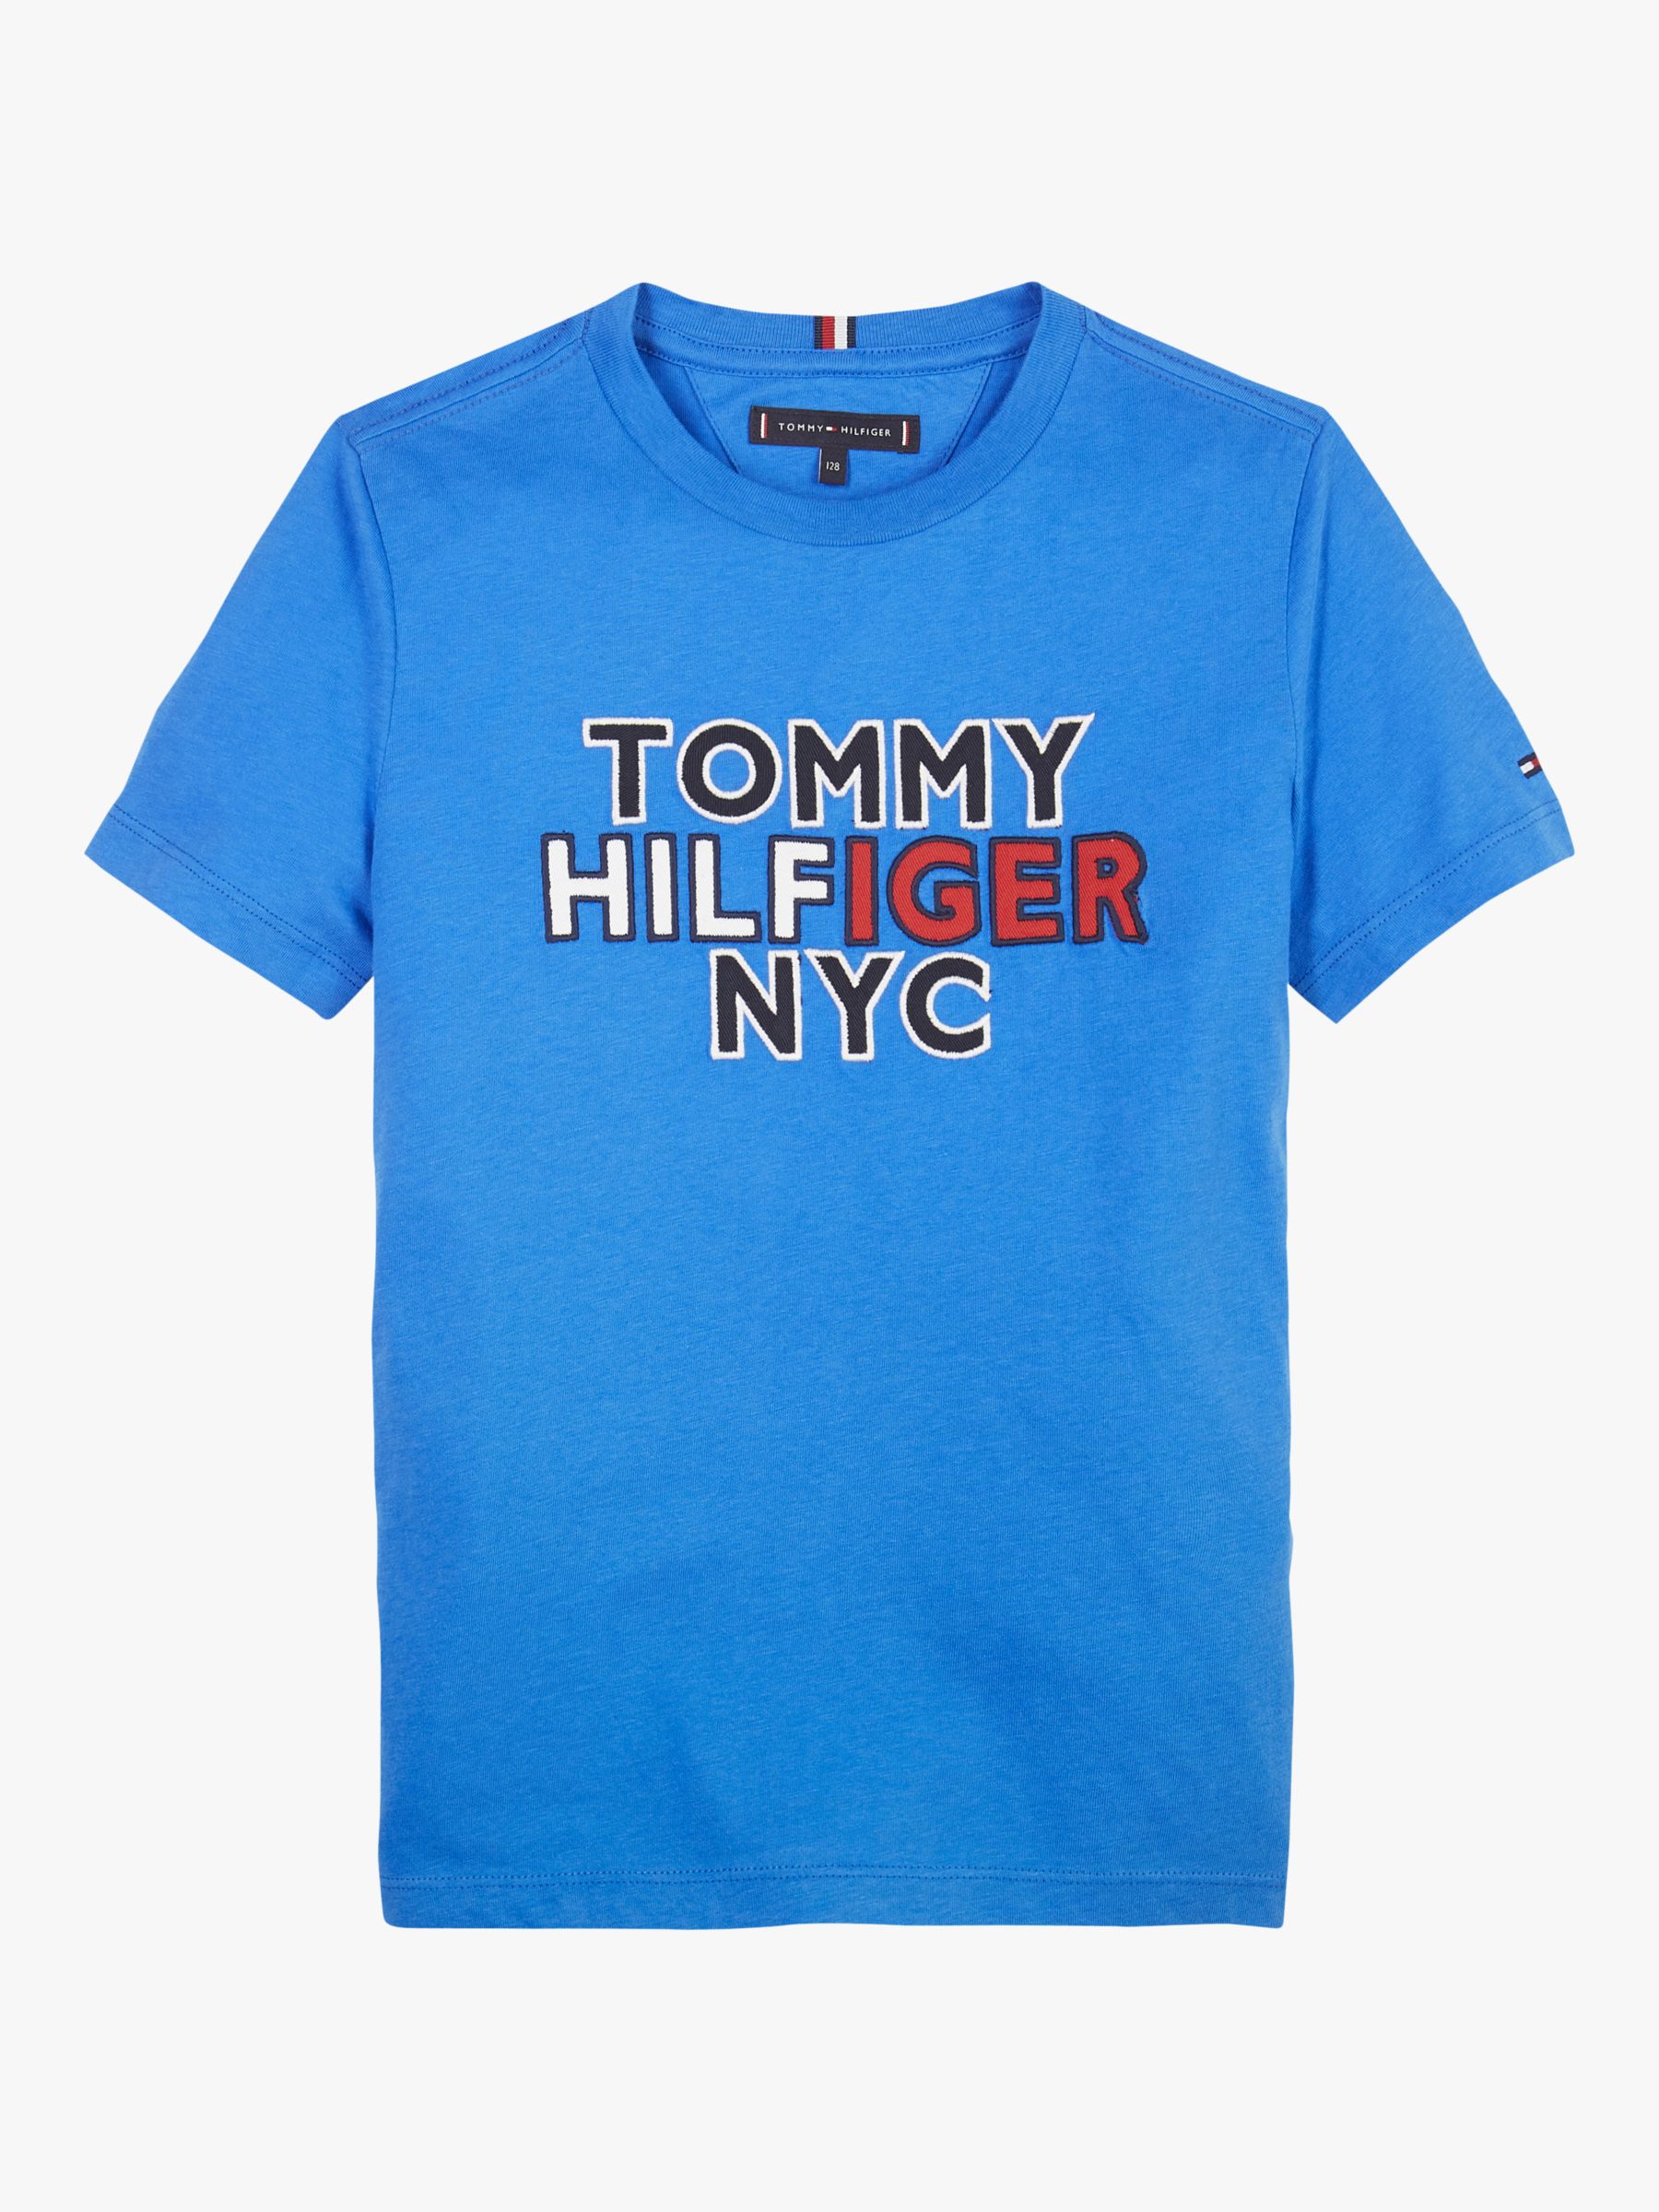 Image of Tommy Hilfiger Boys NYC TShirt